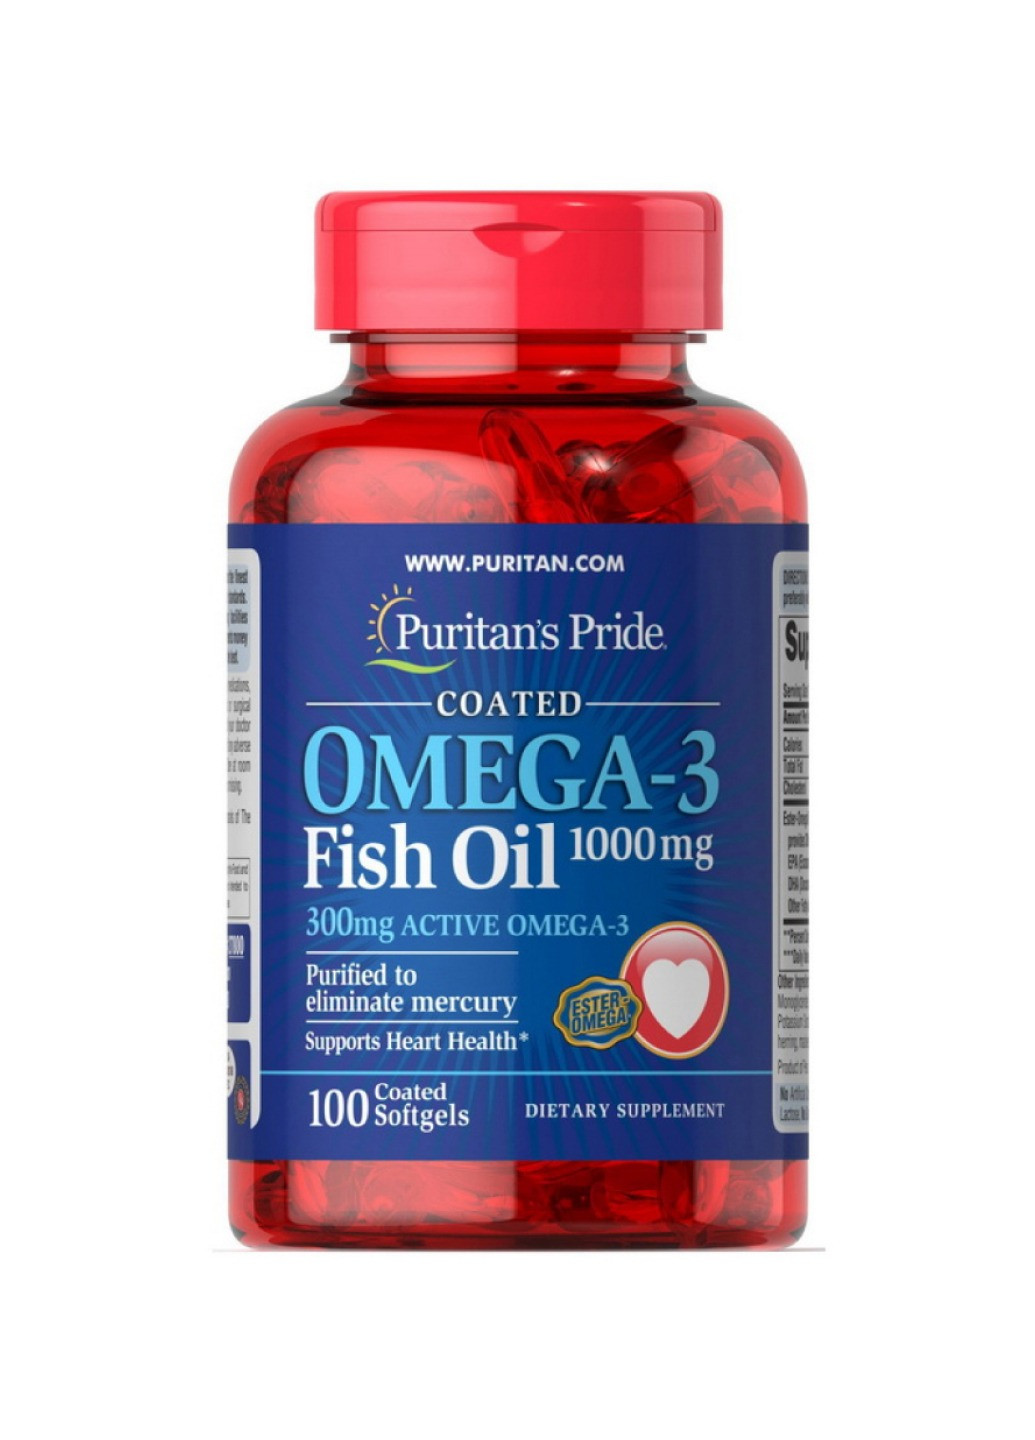 Omega-3 Fish Oil 1000 mg (300 mg Active Omega-3) - 100 Softgels Puritans Pride (258463463)